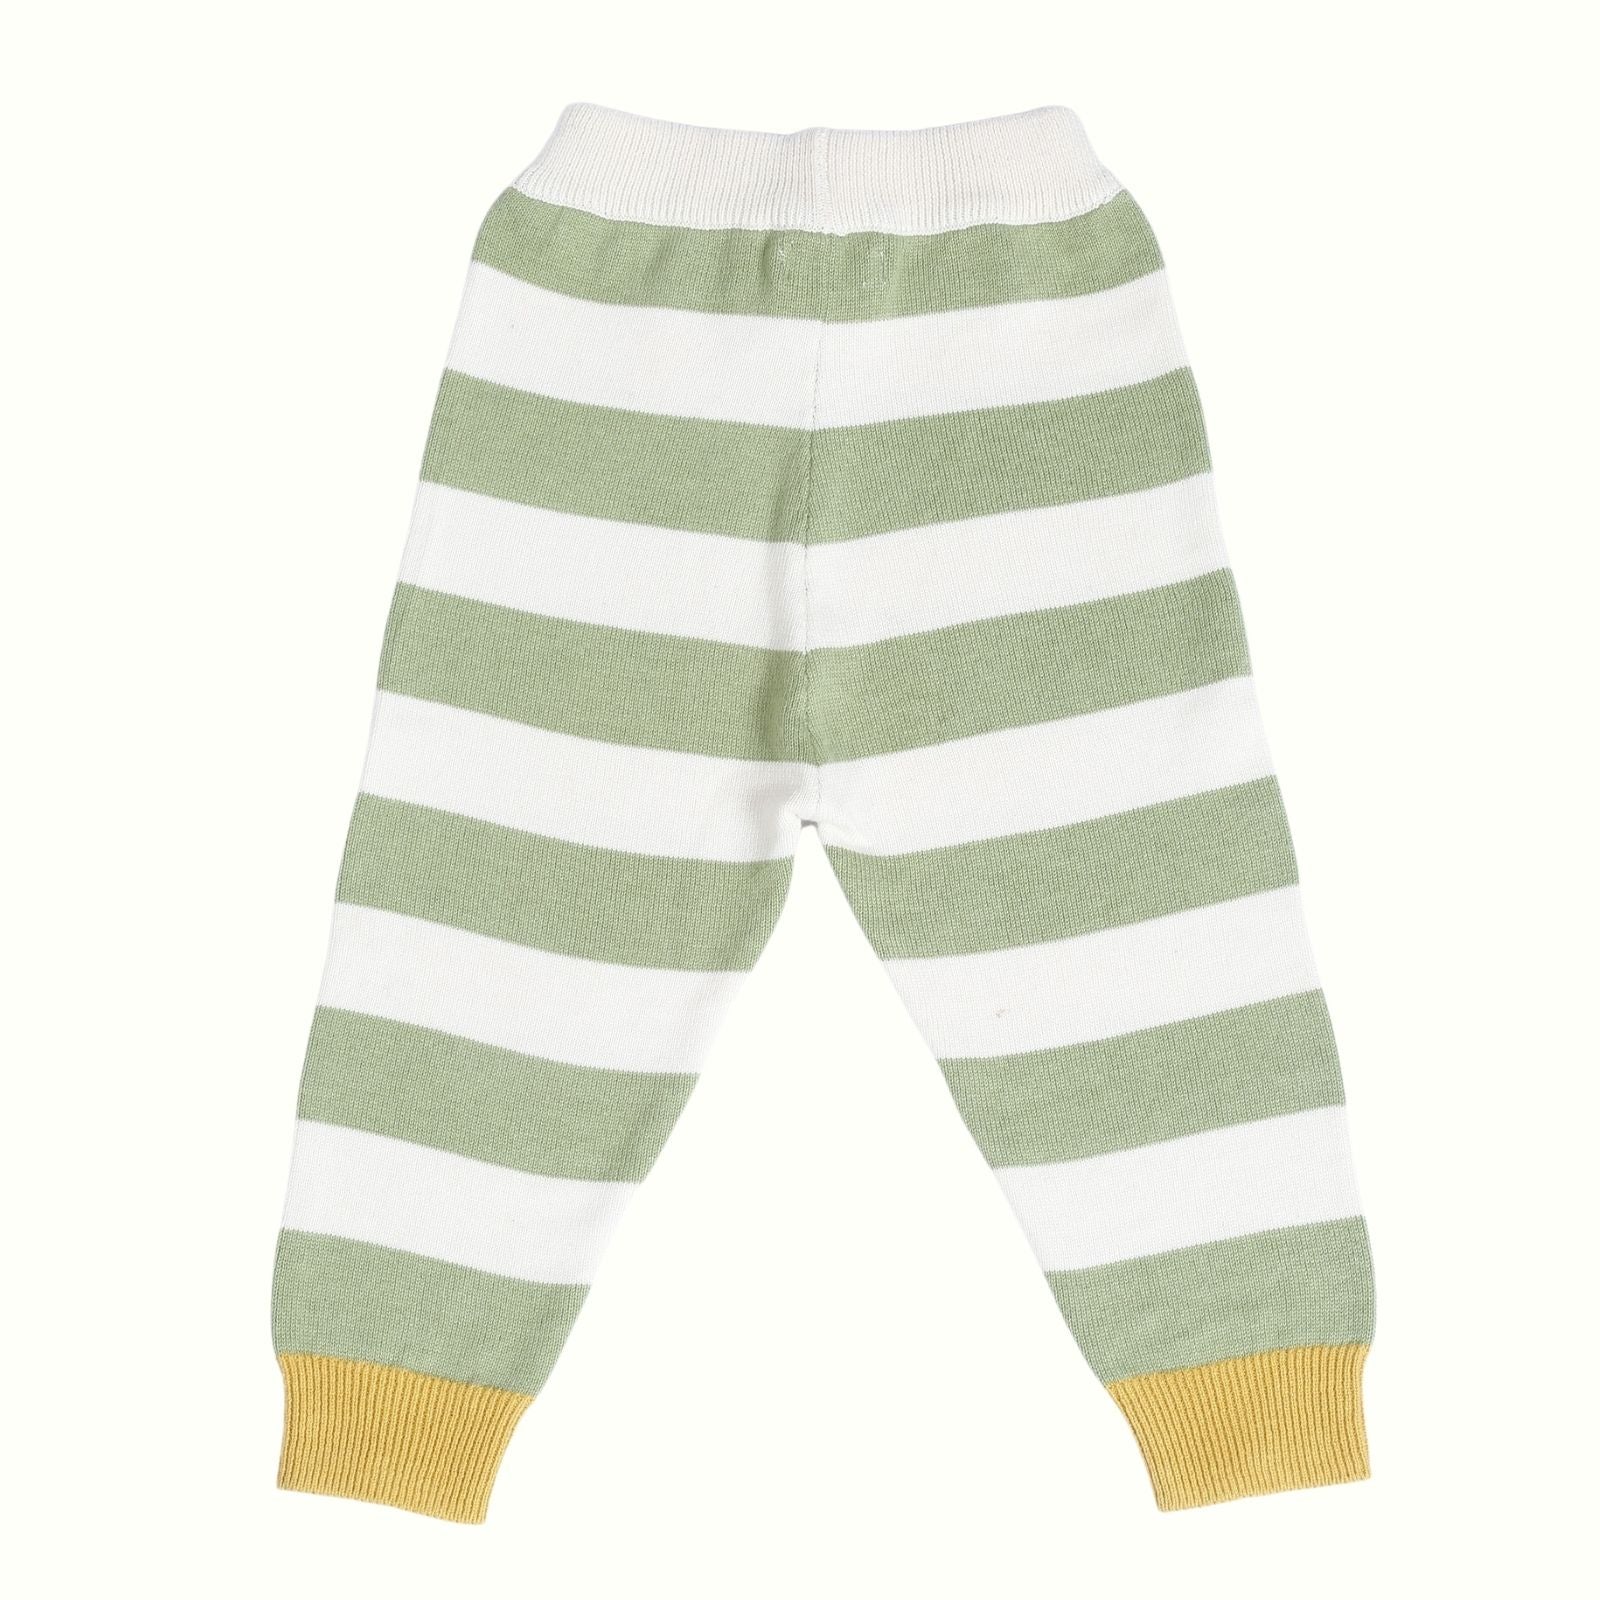 Greendeer Yellow & Green Stripe 100% Cotton Diaper Lowers Set of 2